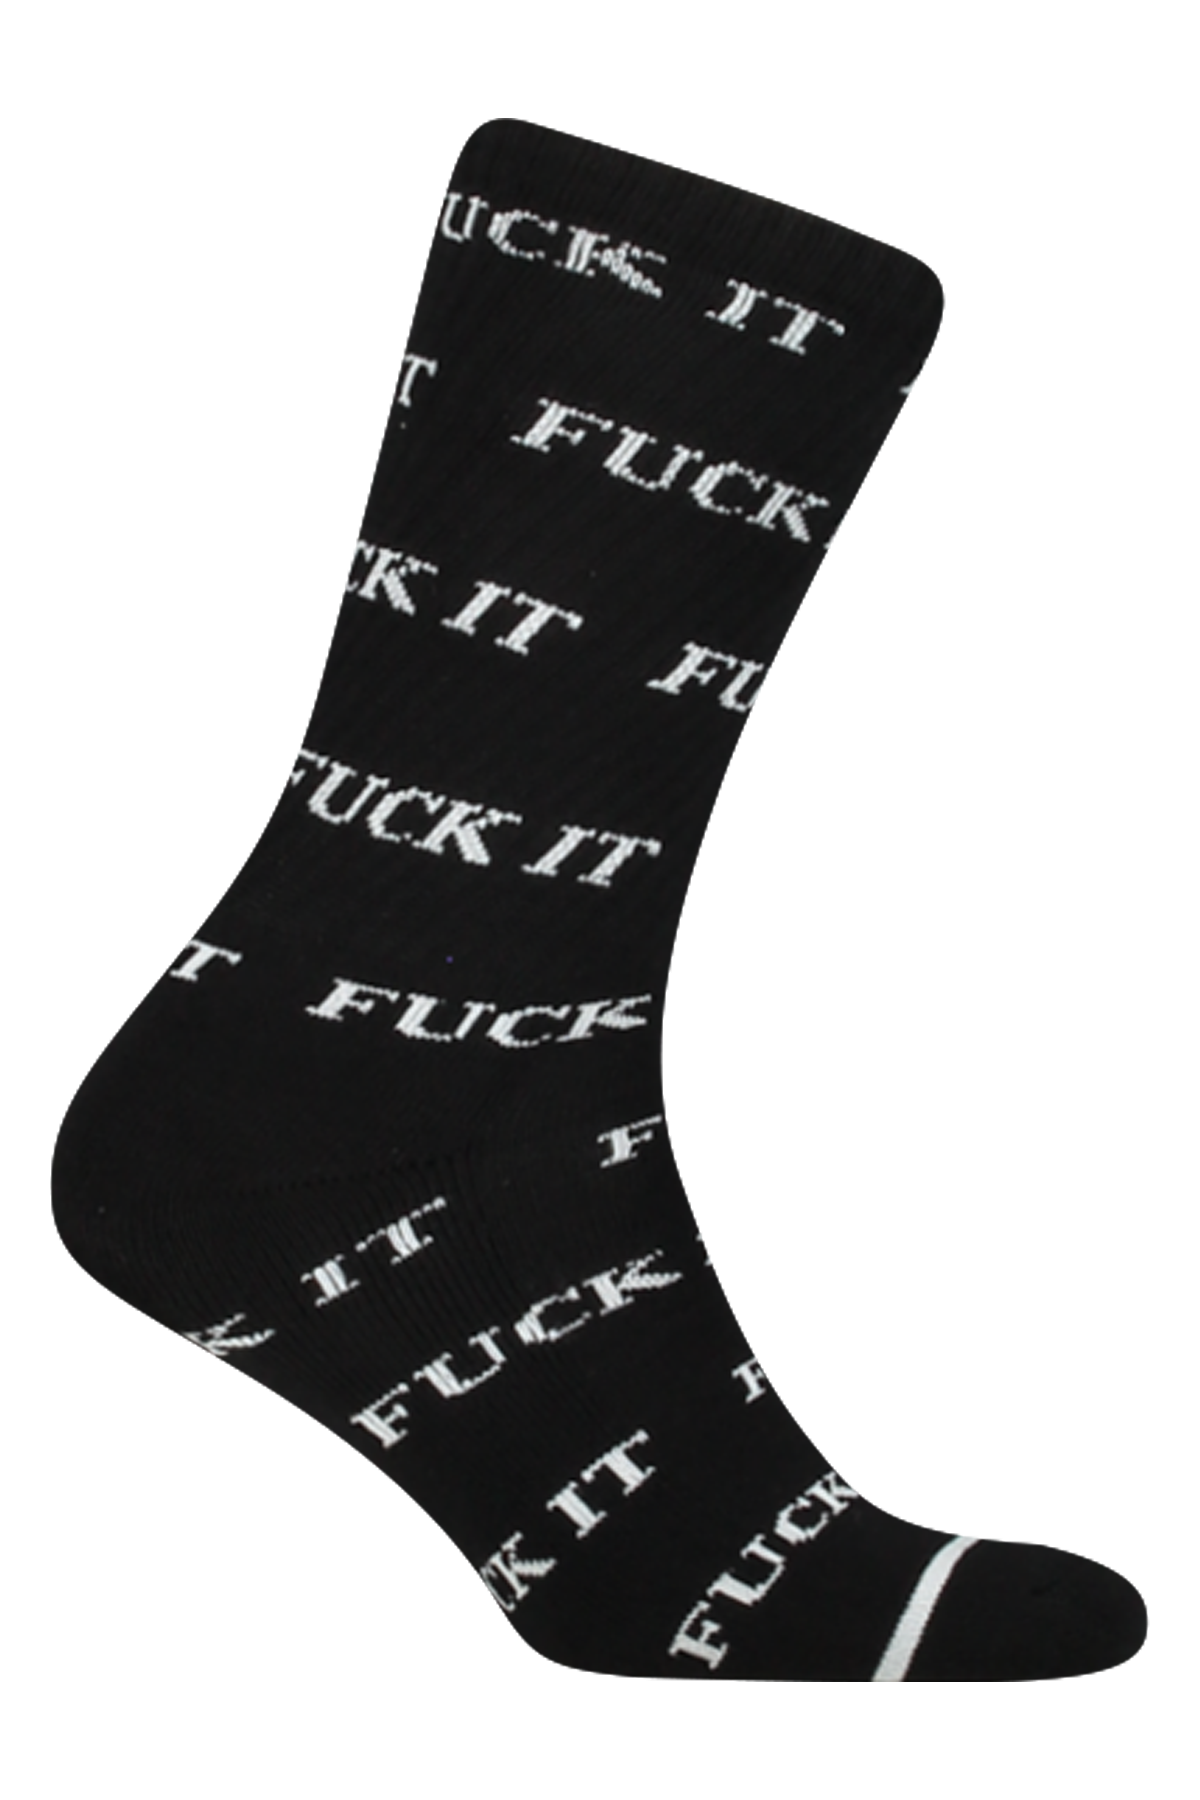 Socks HUF - FUCK IT SOCK